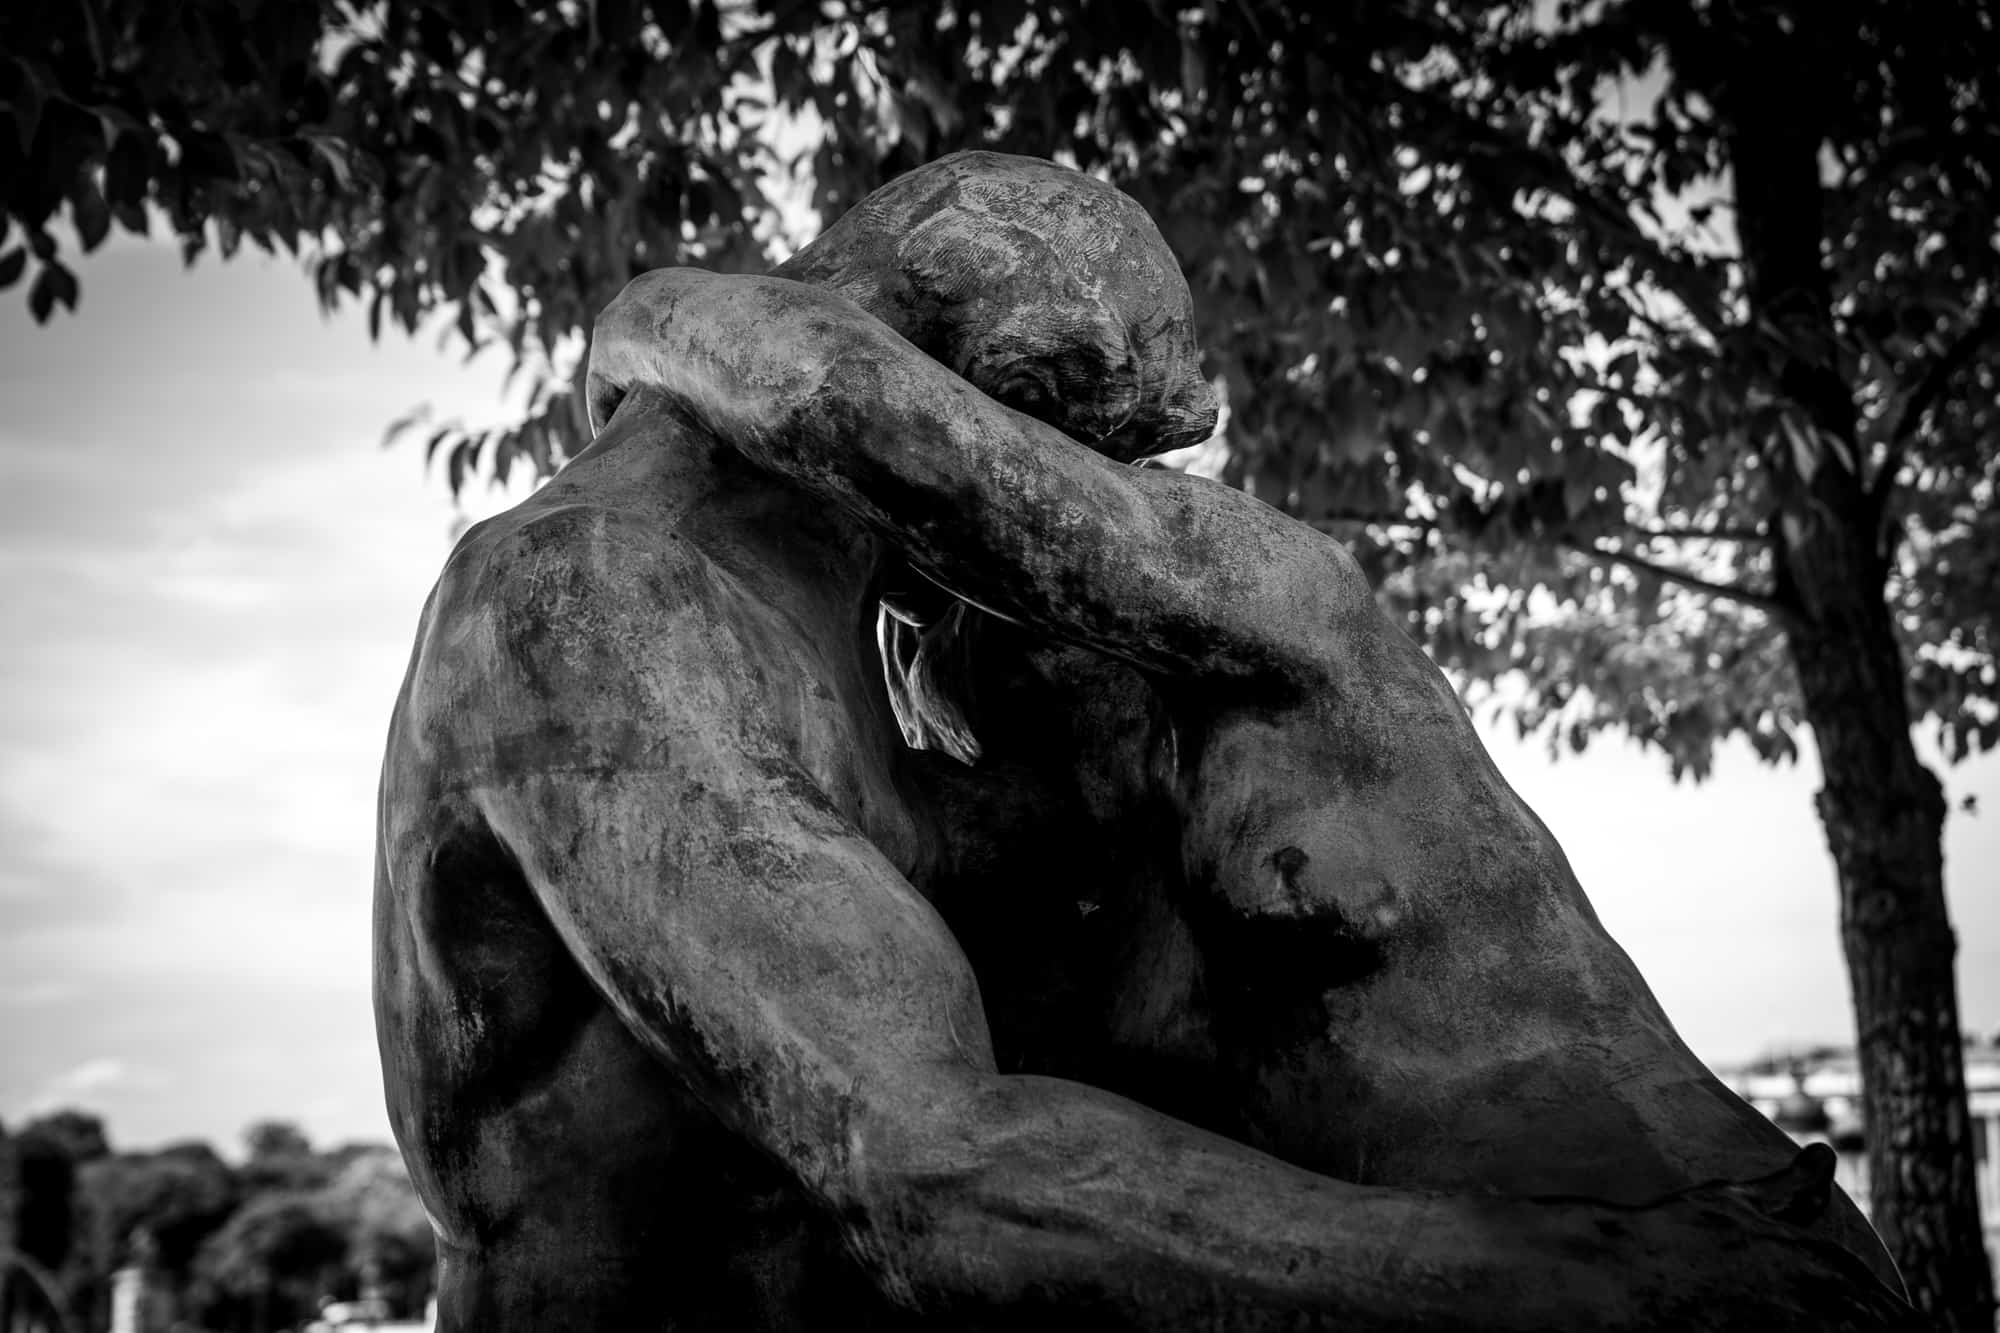 Le Baiser (The Kiss) Rodin sculpture